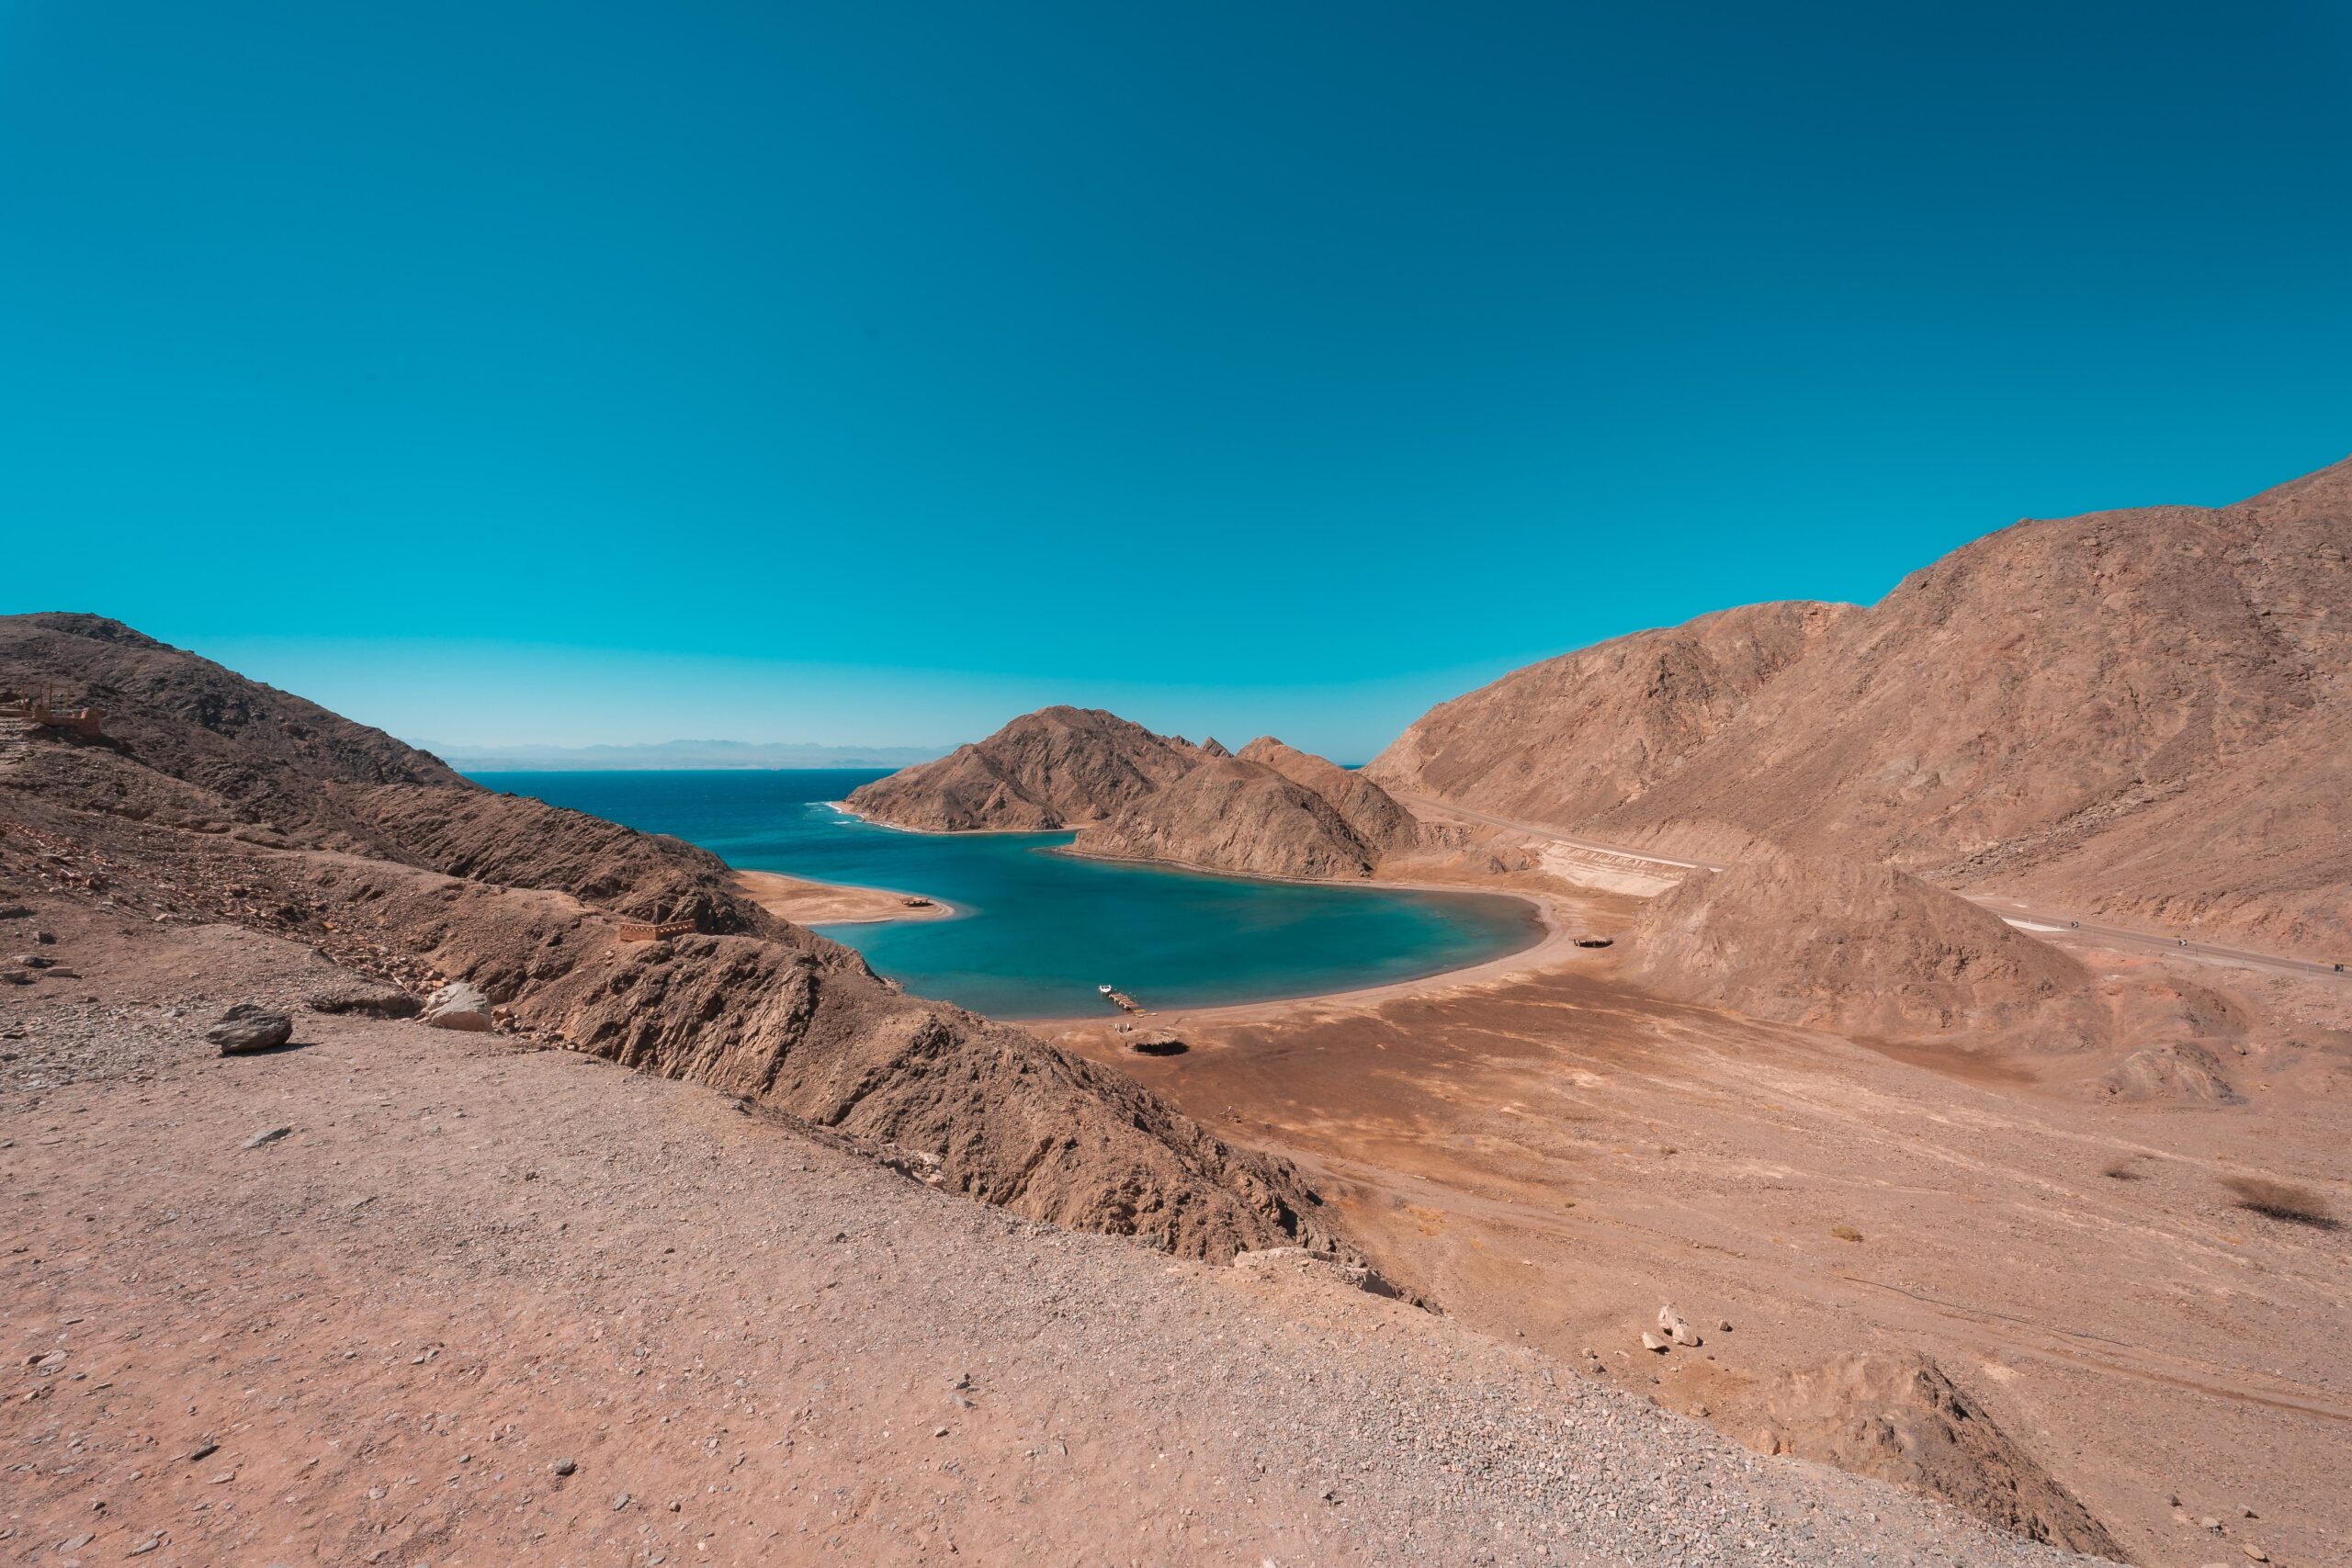 Sinai Peninsula, Nuweiba, Egypt